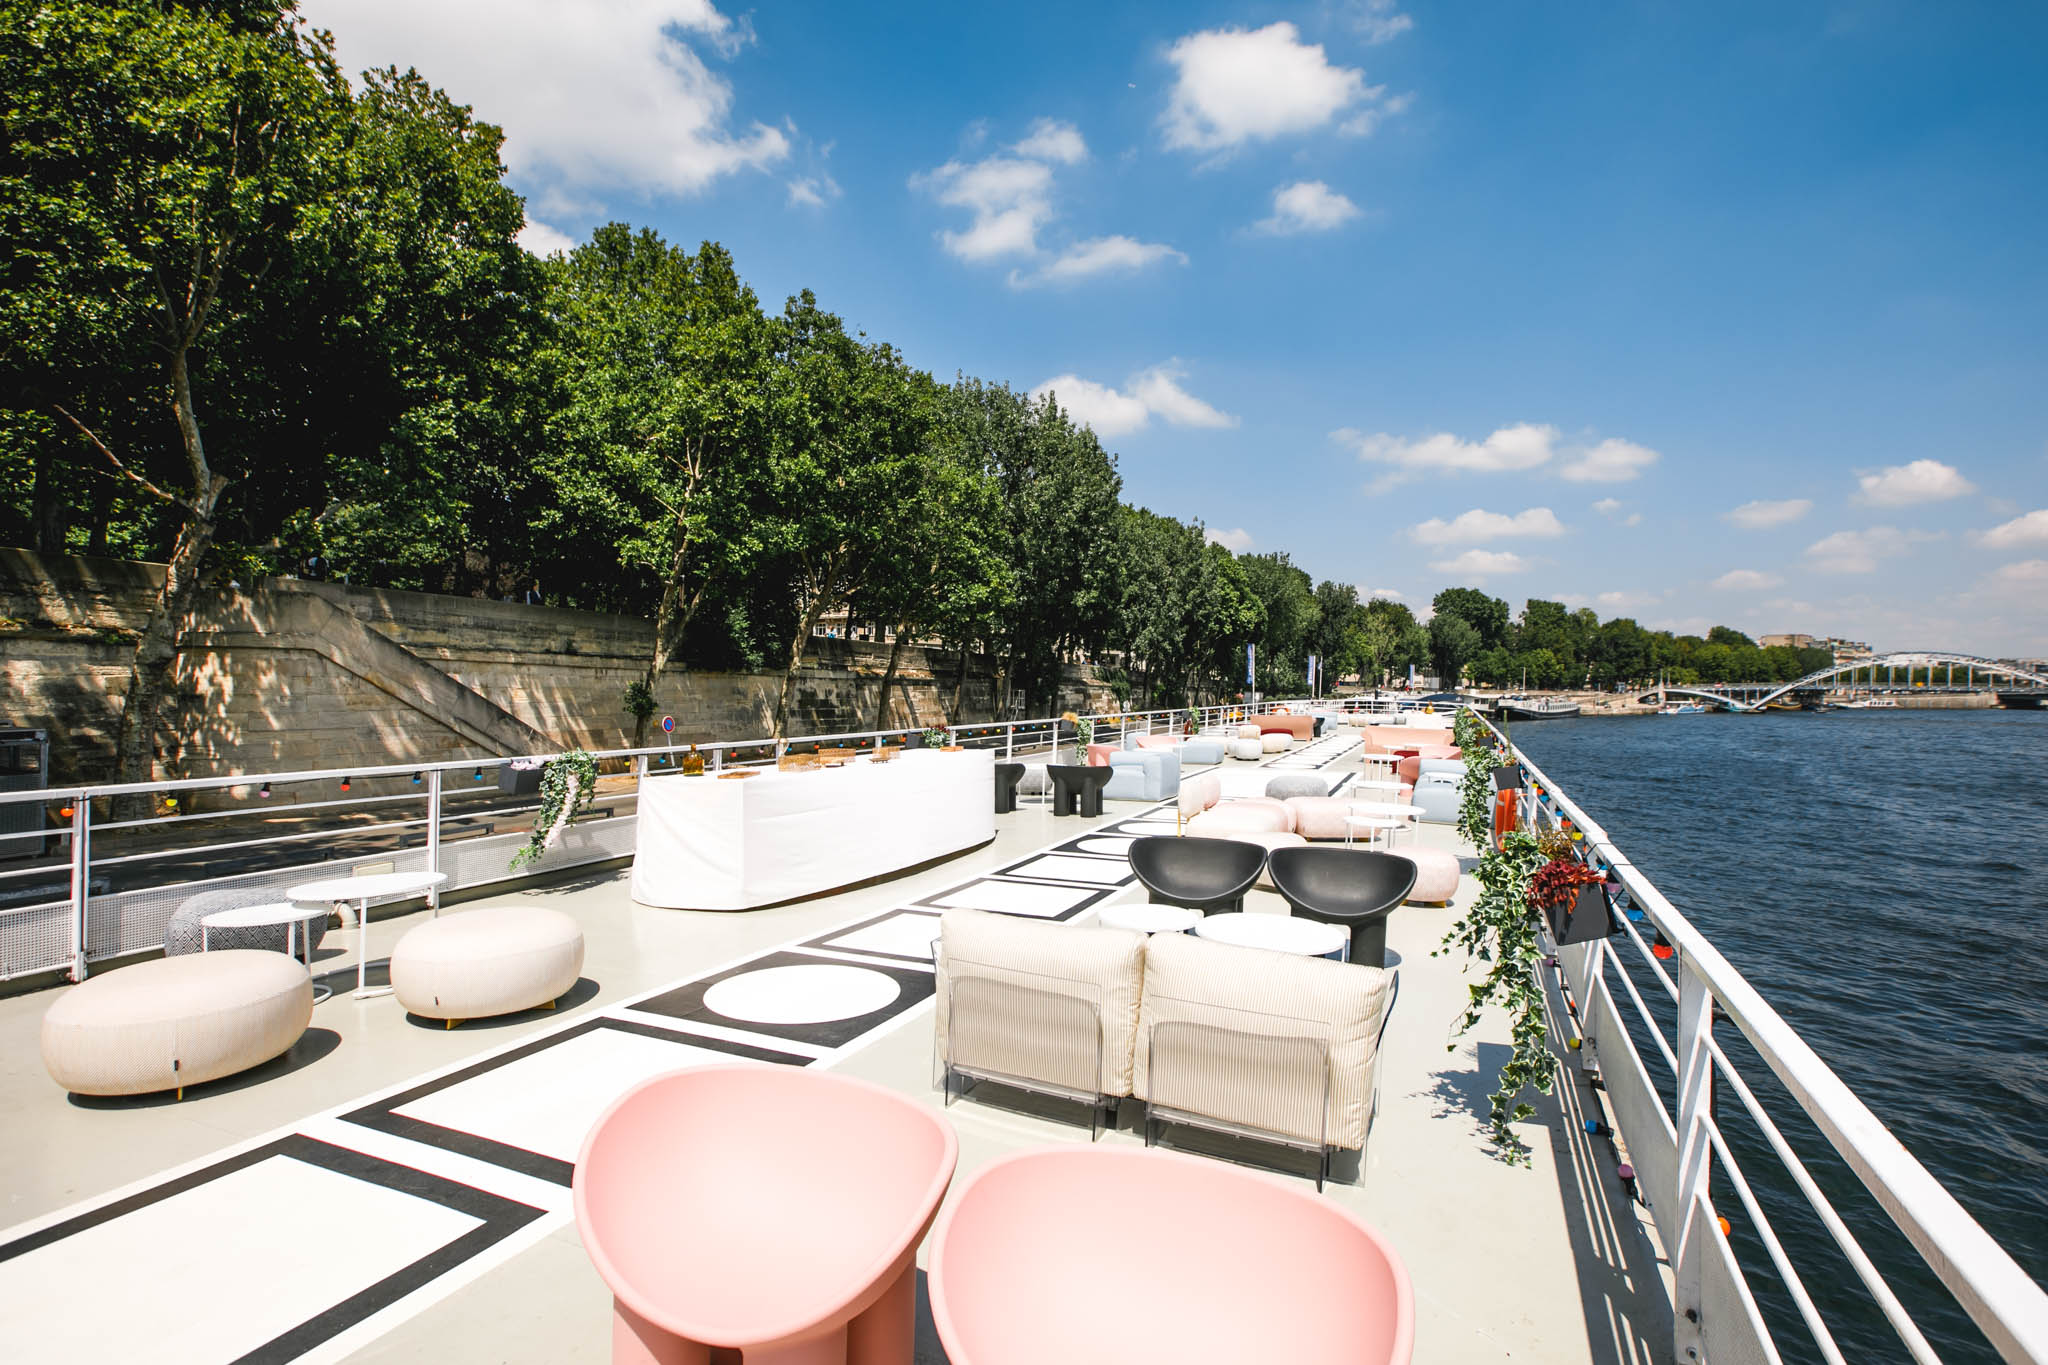 The Boréas offers the largest sailing rooftop in Paris